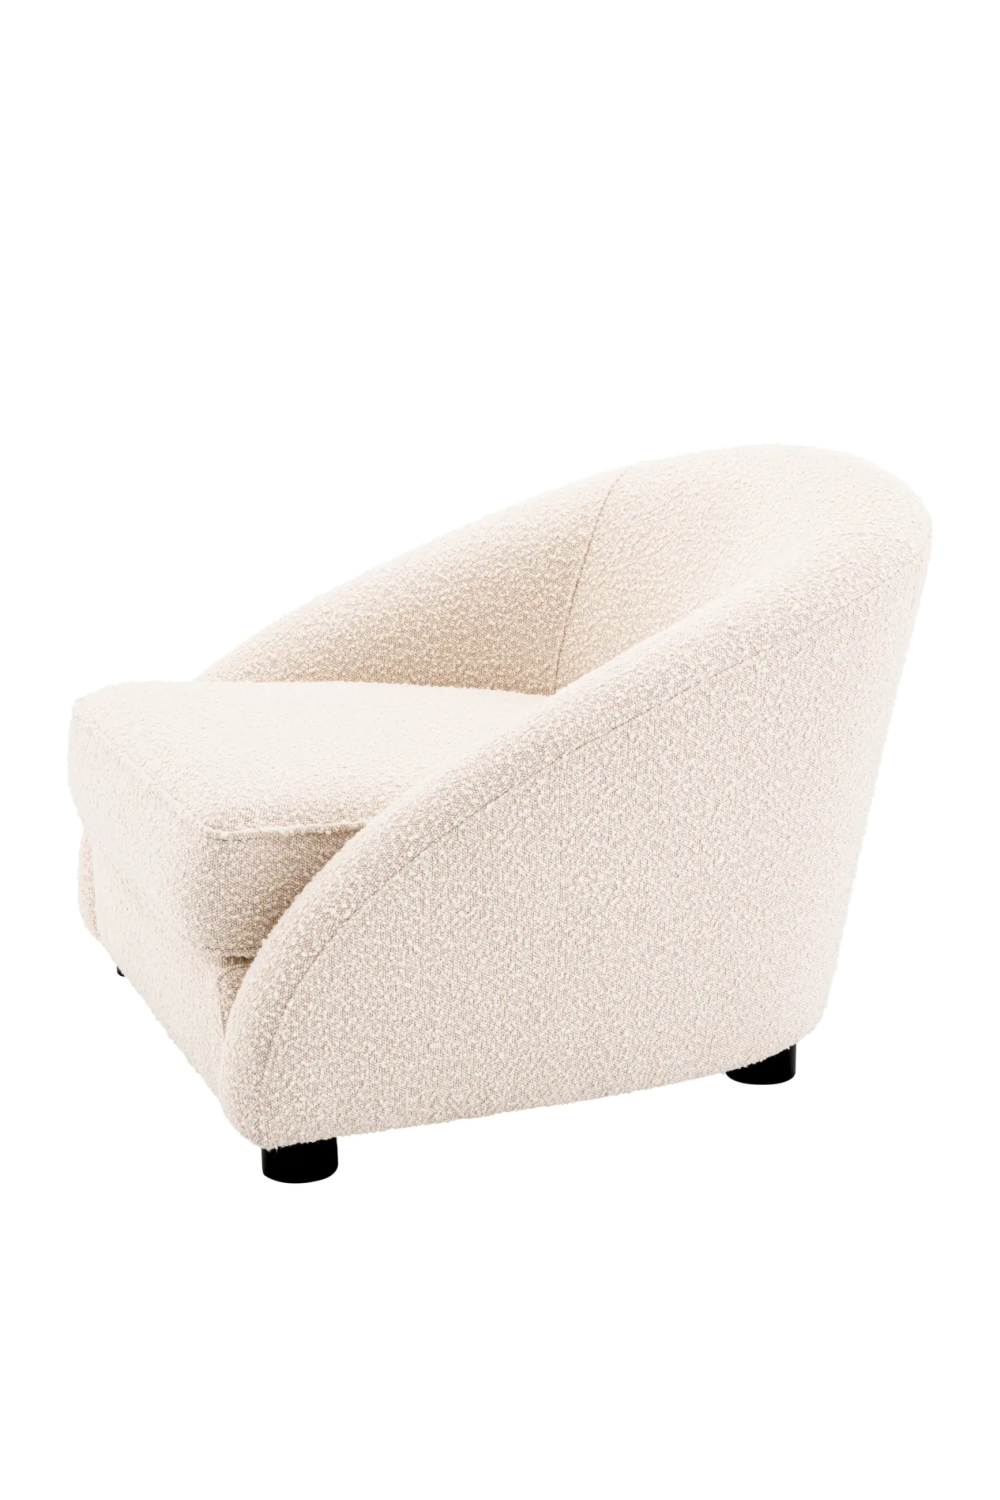 Bouclé Cream Accent Chair | Eichholtz Cruz | Oroa.com